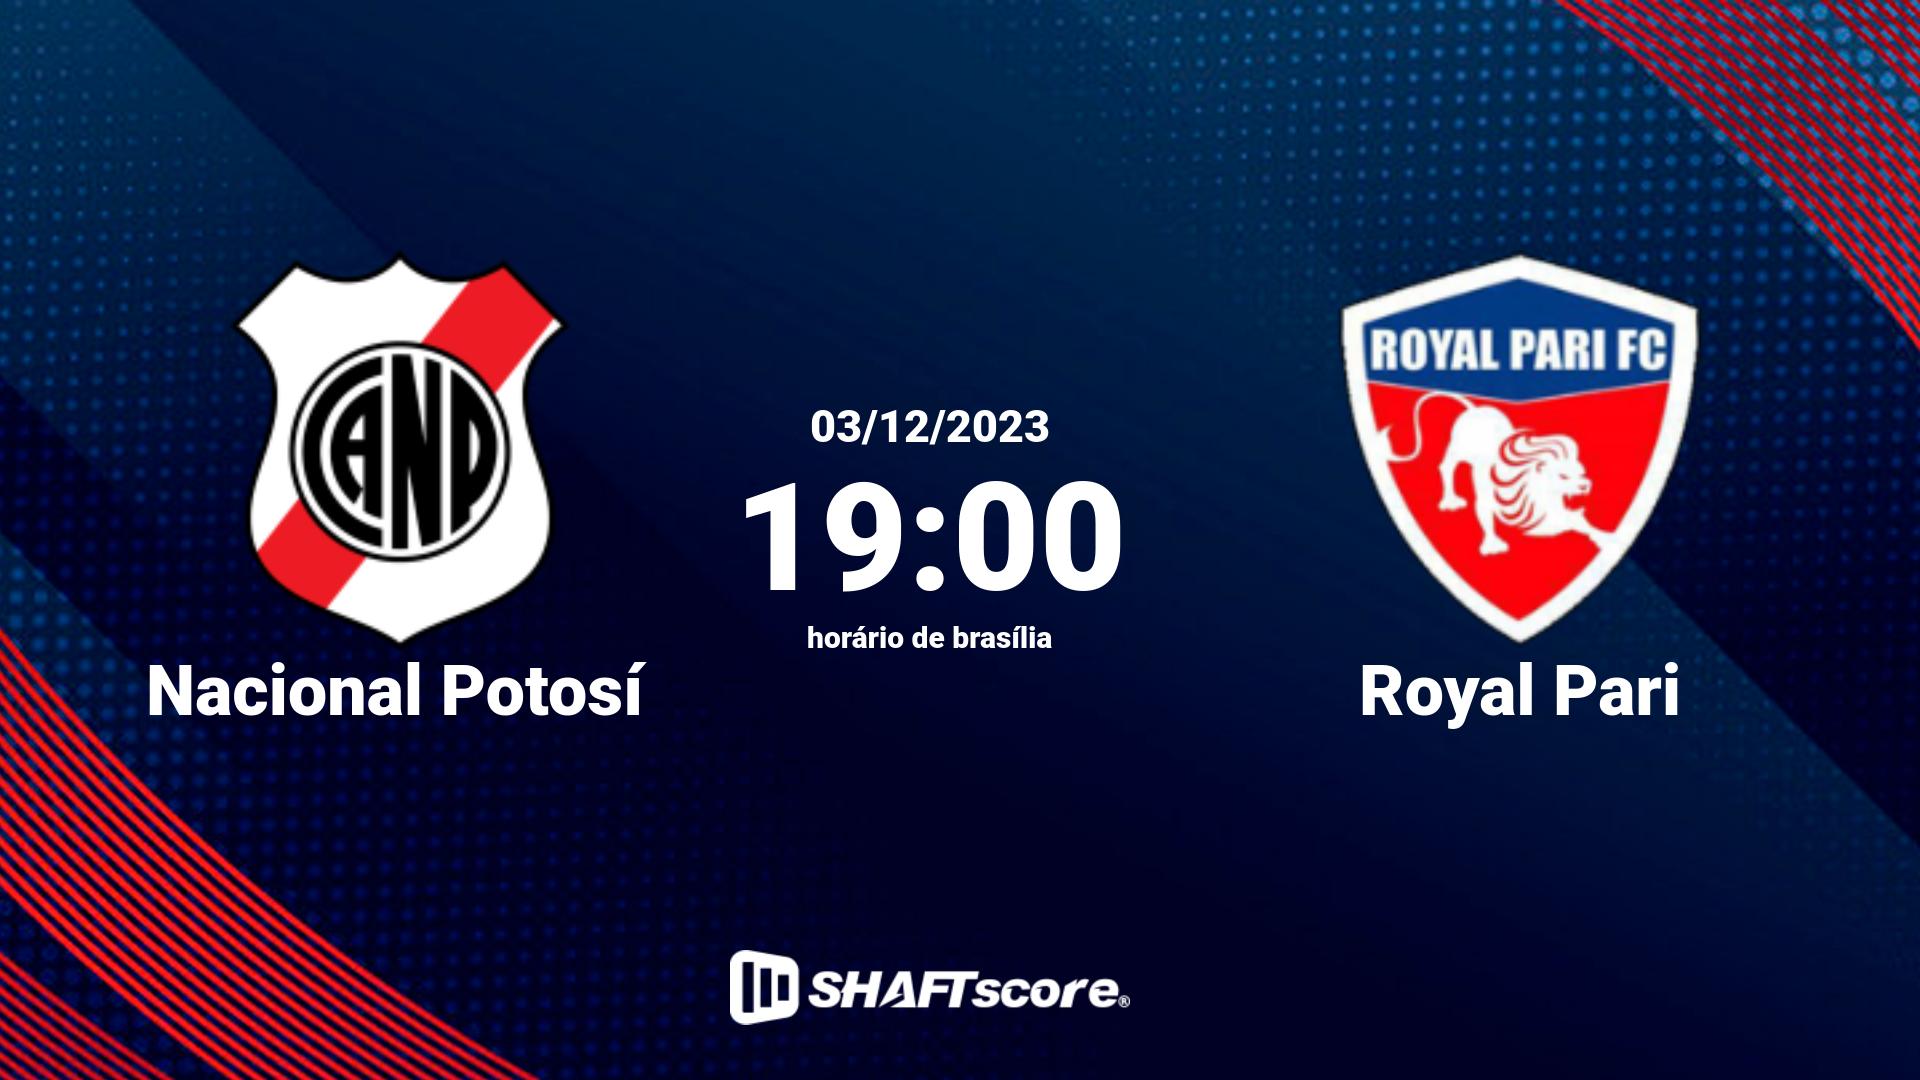 Estatísticas do jogo Nacional Potosí vs Royal Pari 03.12 19:00